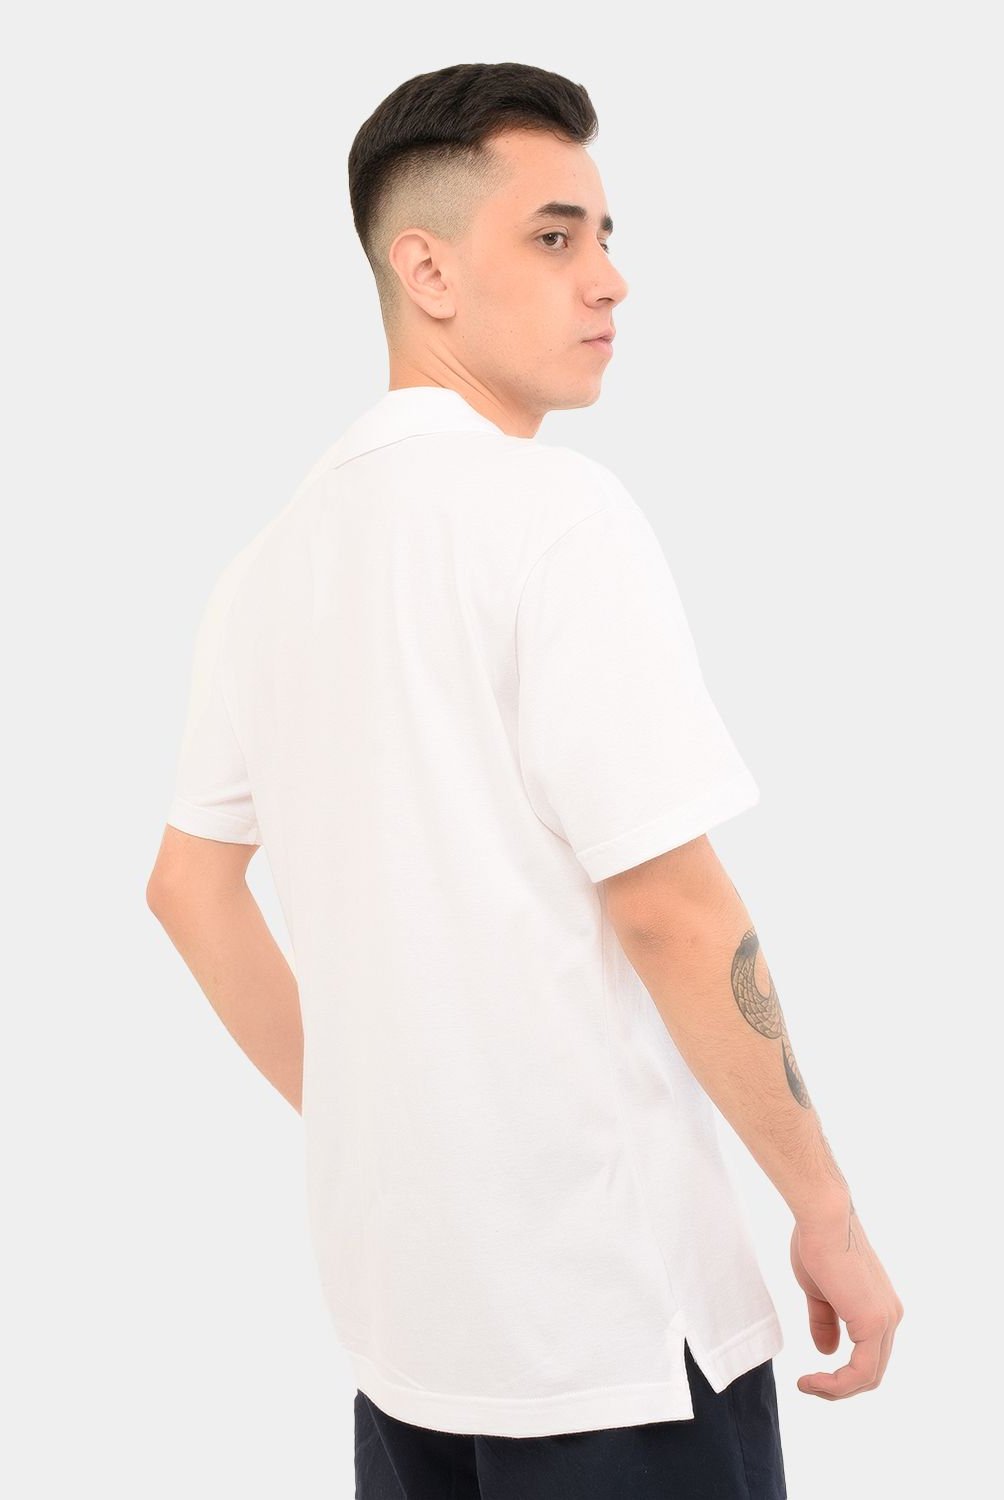 GAP - Camiseta Polo Hombre Manga Corta GAP